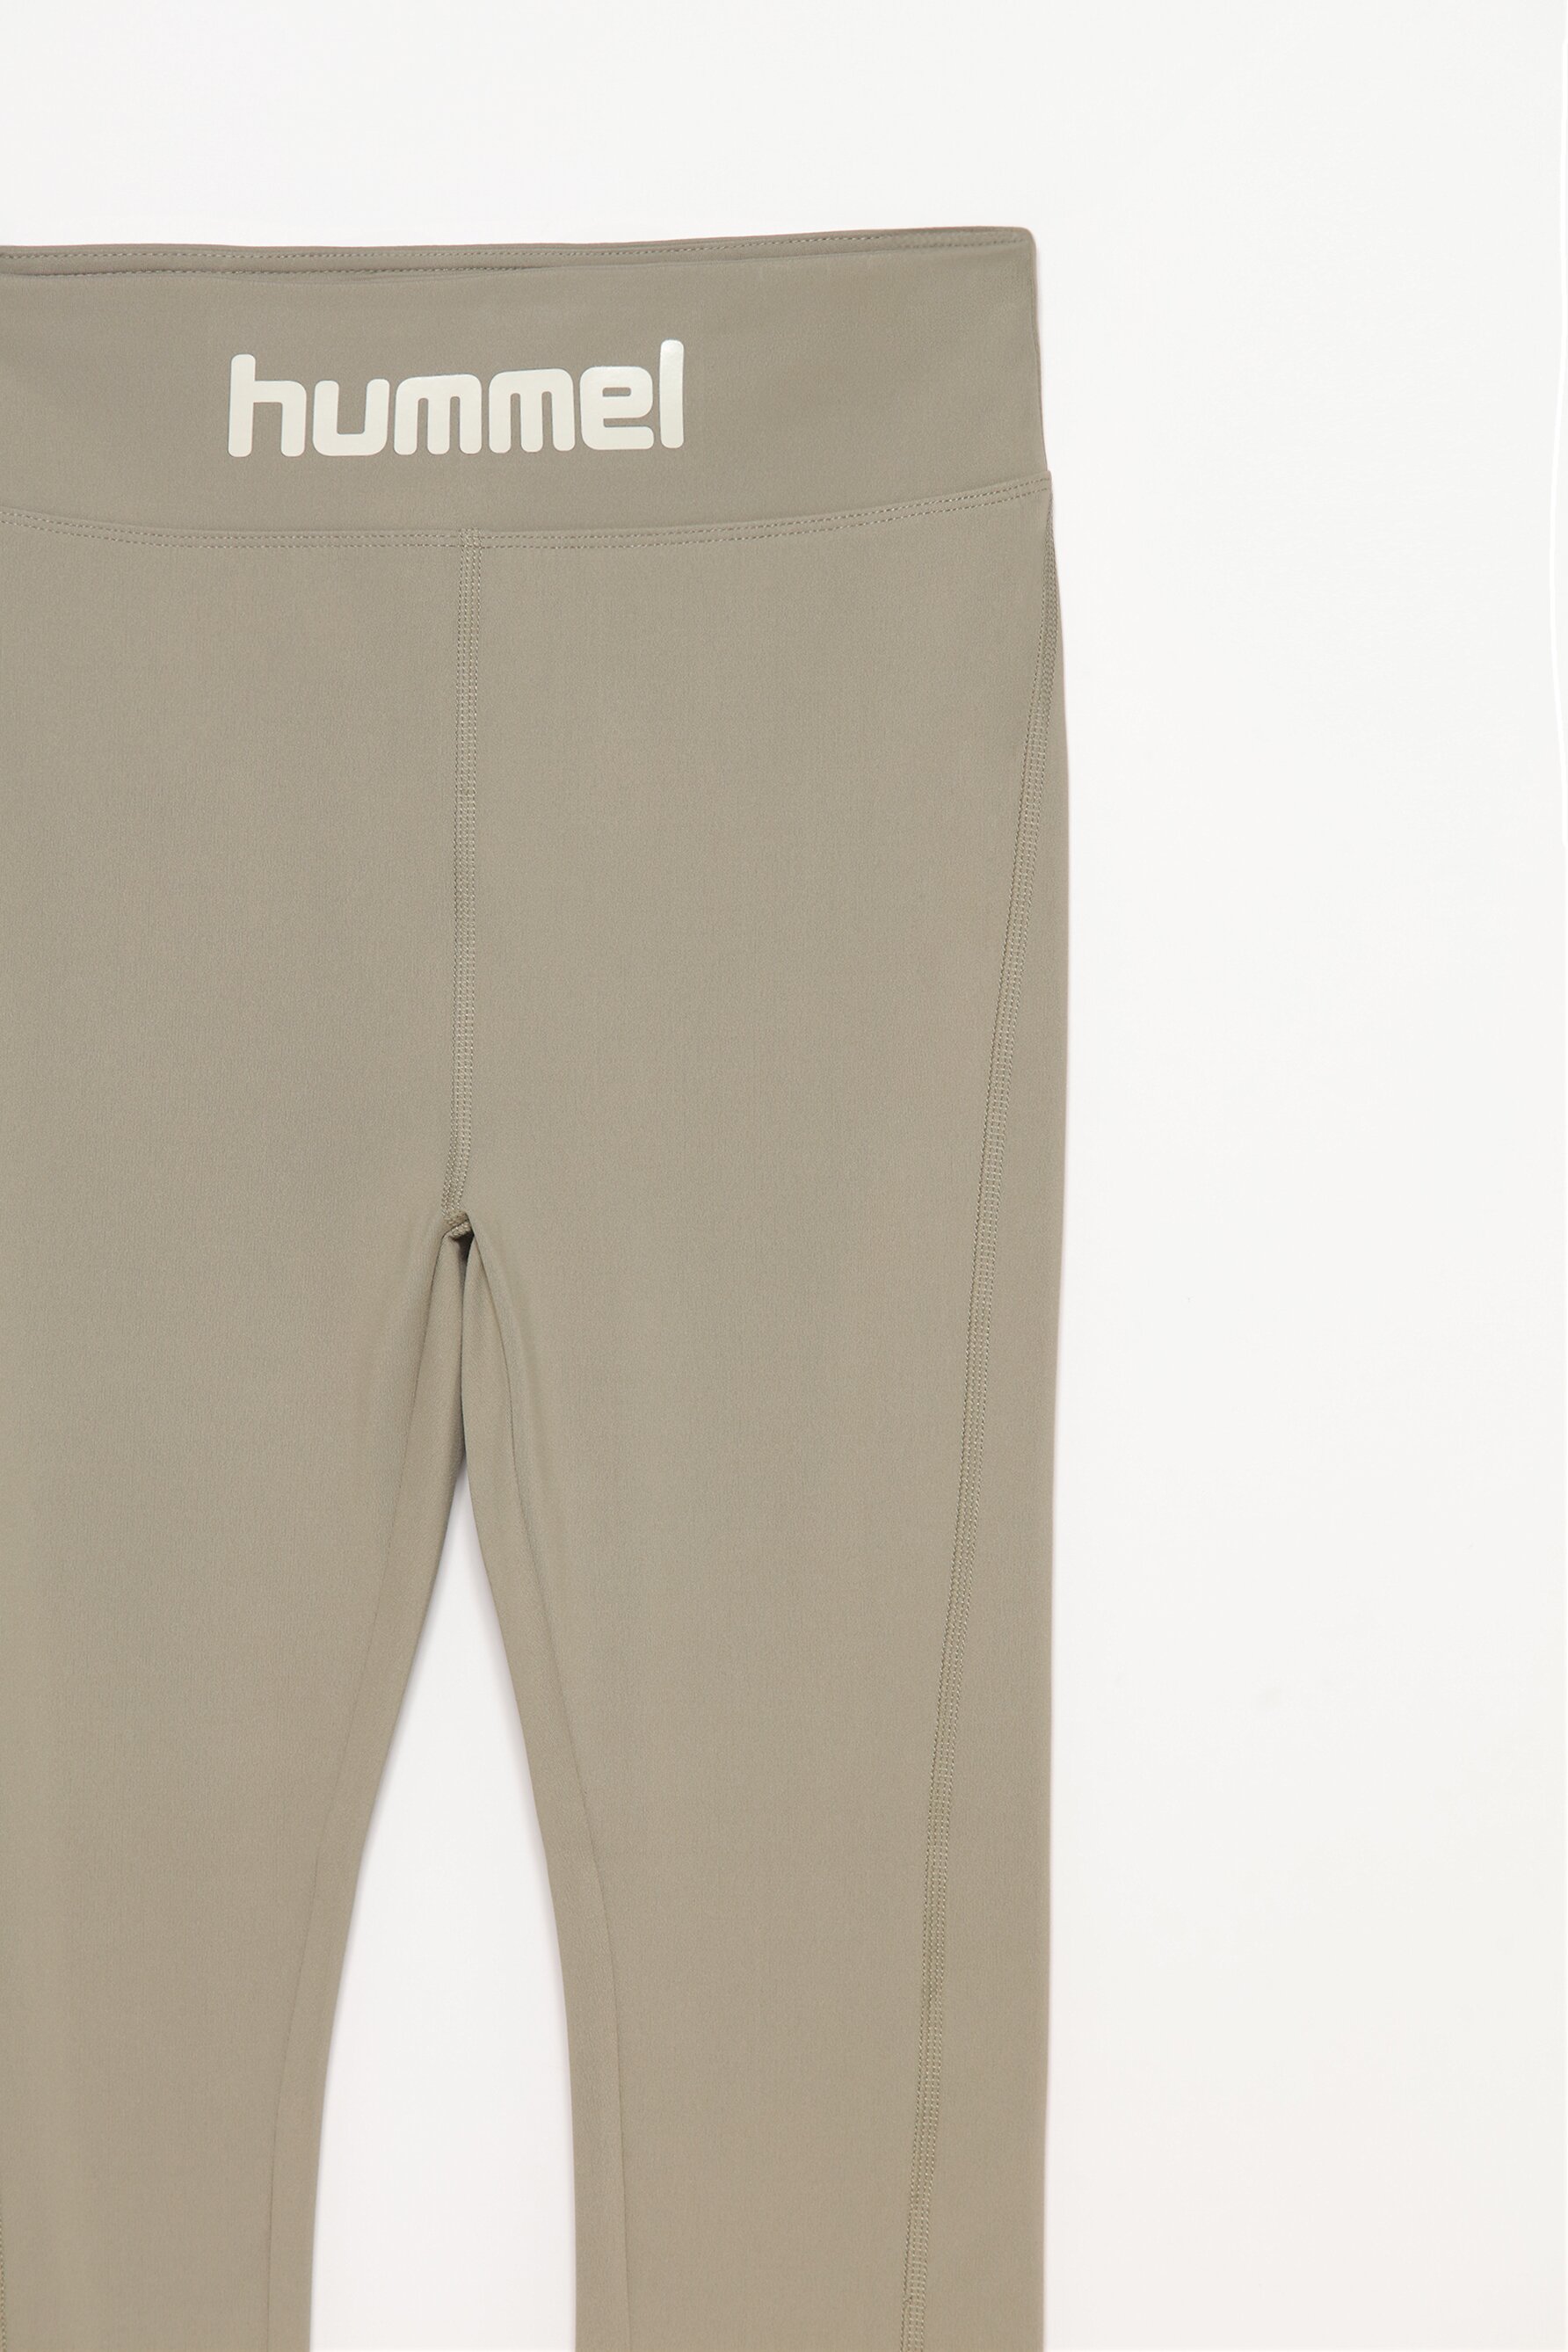 Hummel x Lefties sports leggings